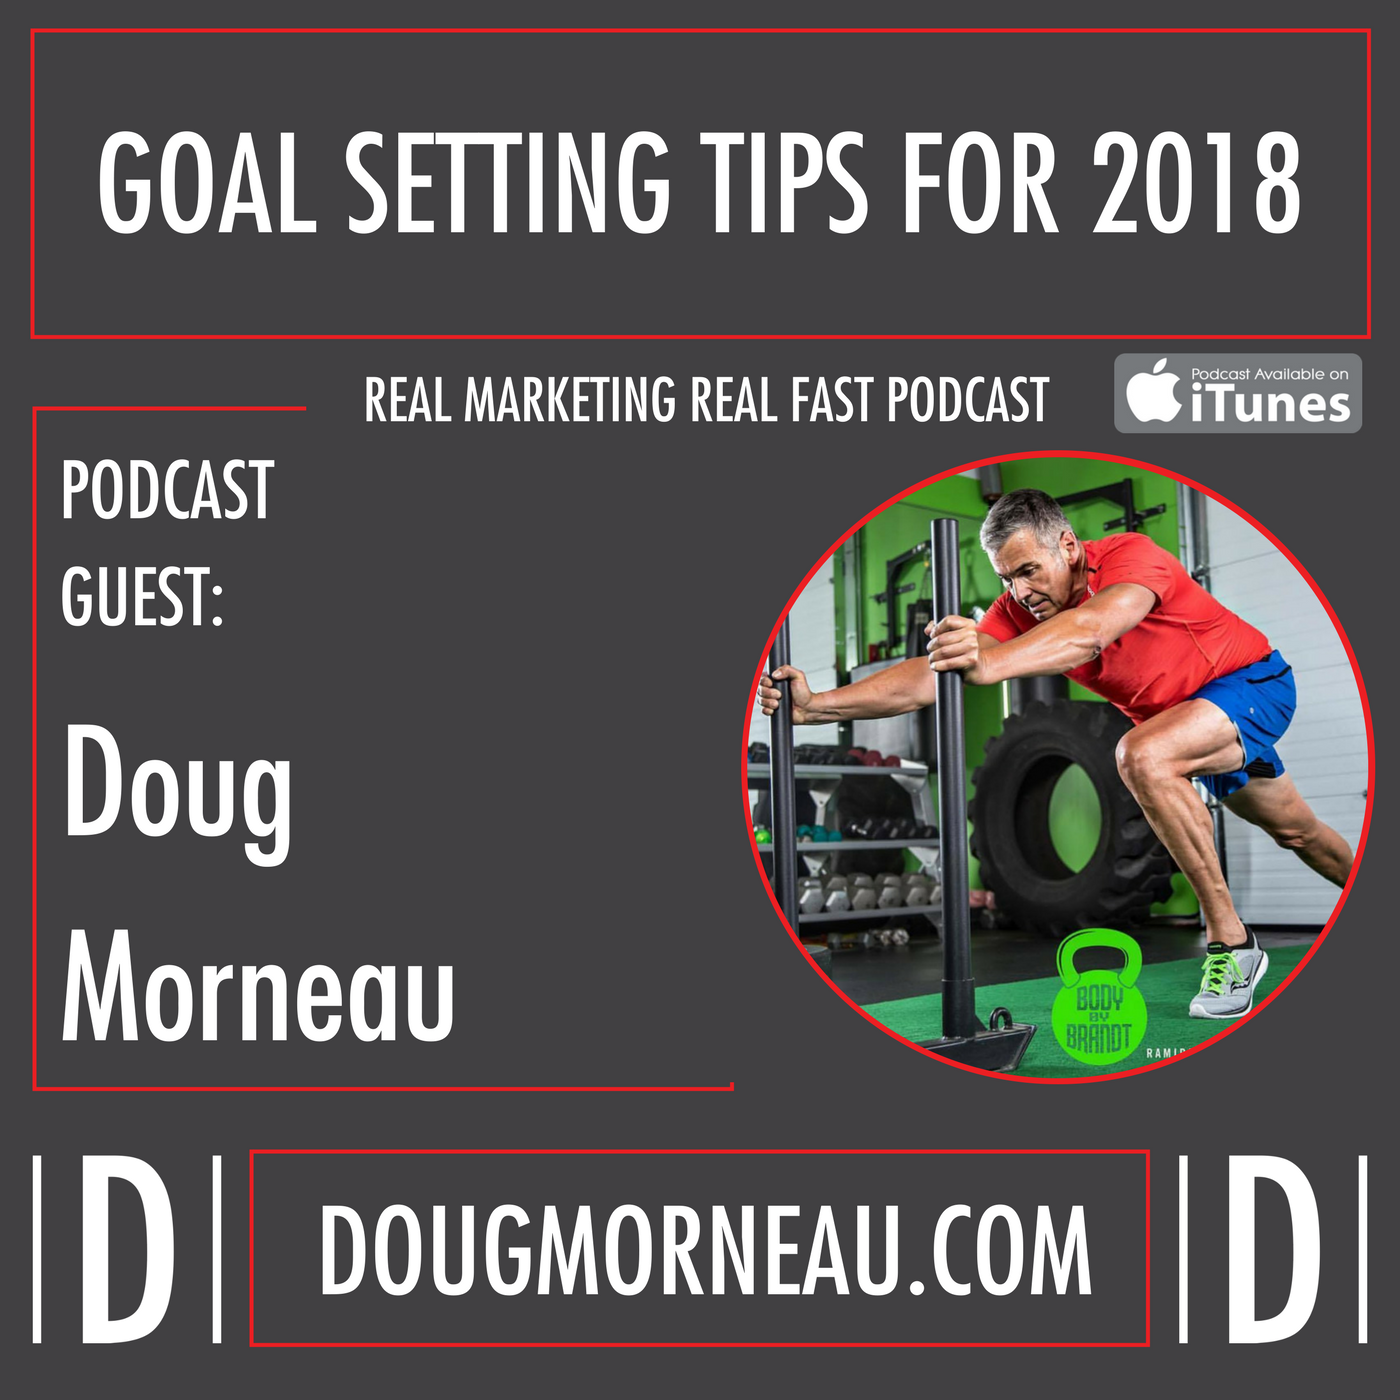 DOUG MORNEAU - GOAL SETTING TIPS FOR 2018 - REAL MARKETING REAL FAST PODCAST